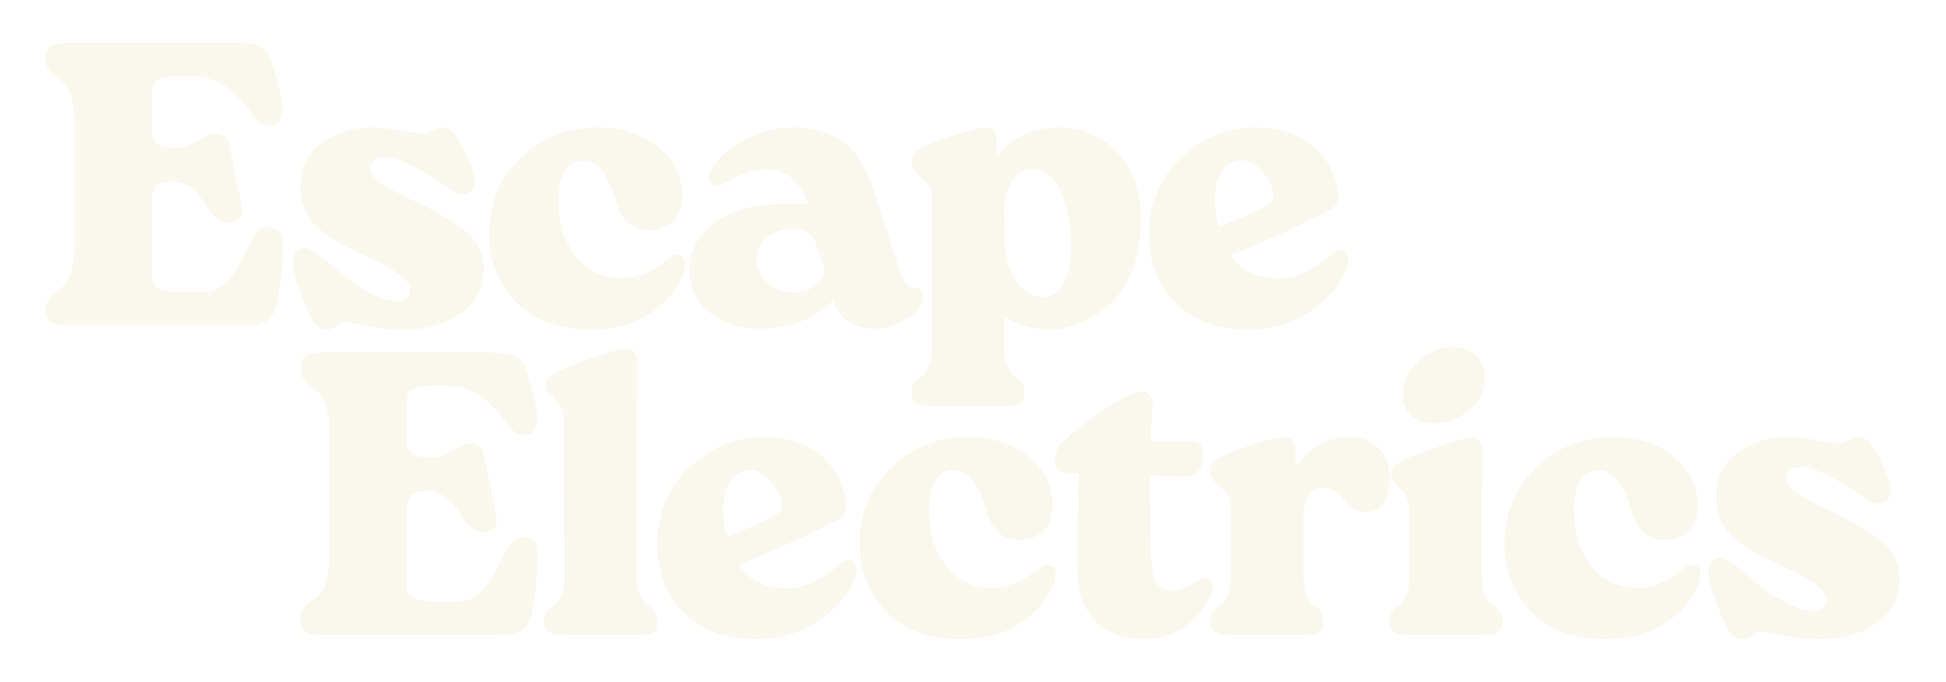 Escape Electrics